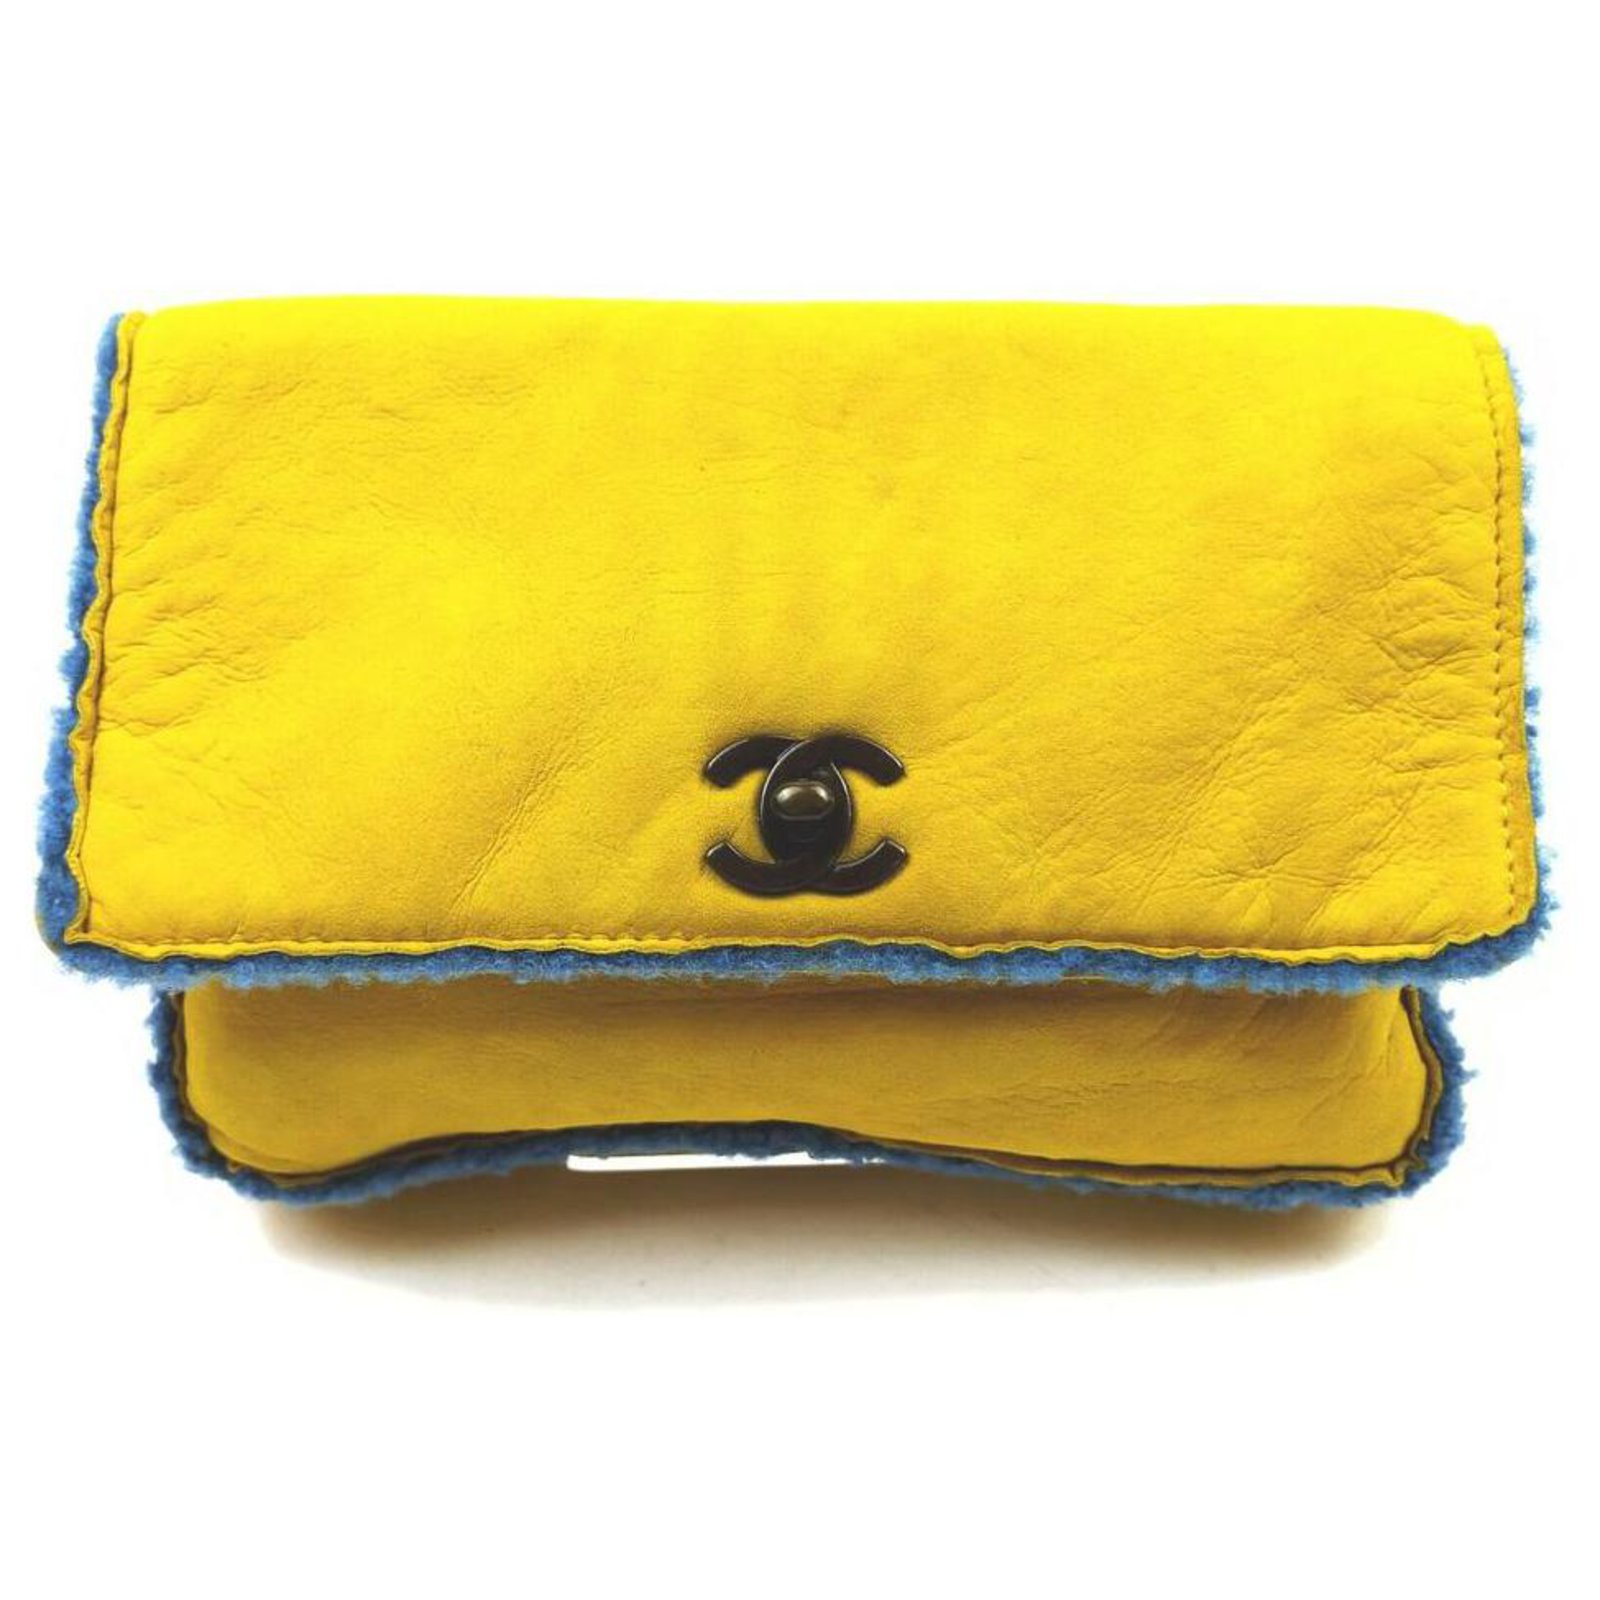 Chanel Yellow Shearling Mouton CC Turnlock Classic Flap Clutch Bag